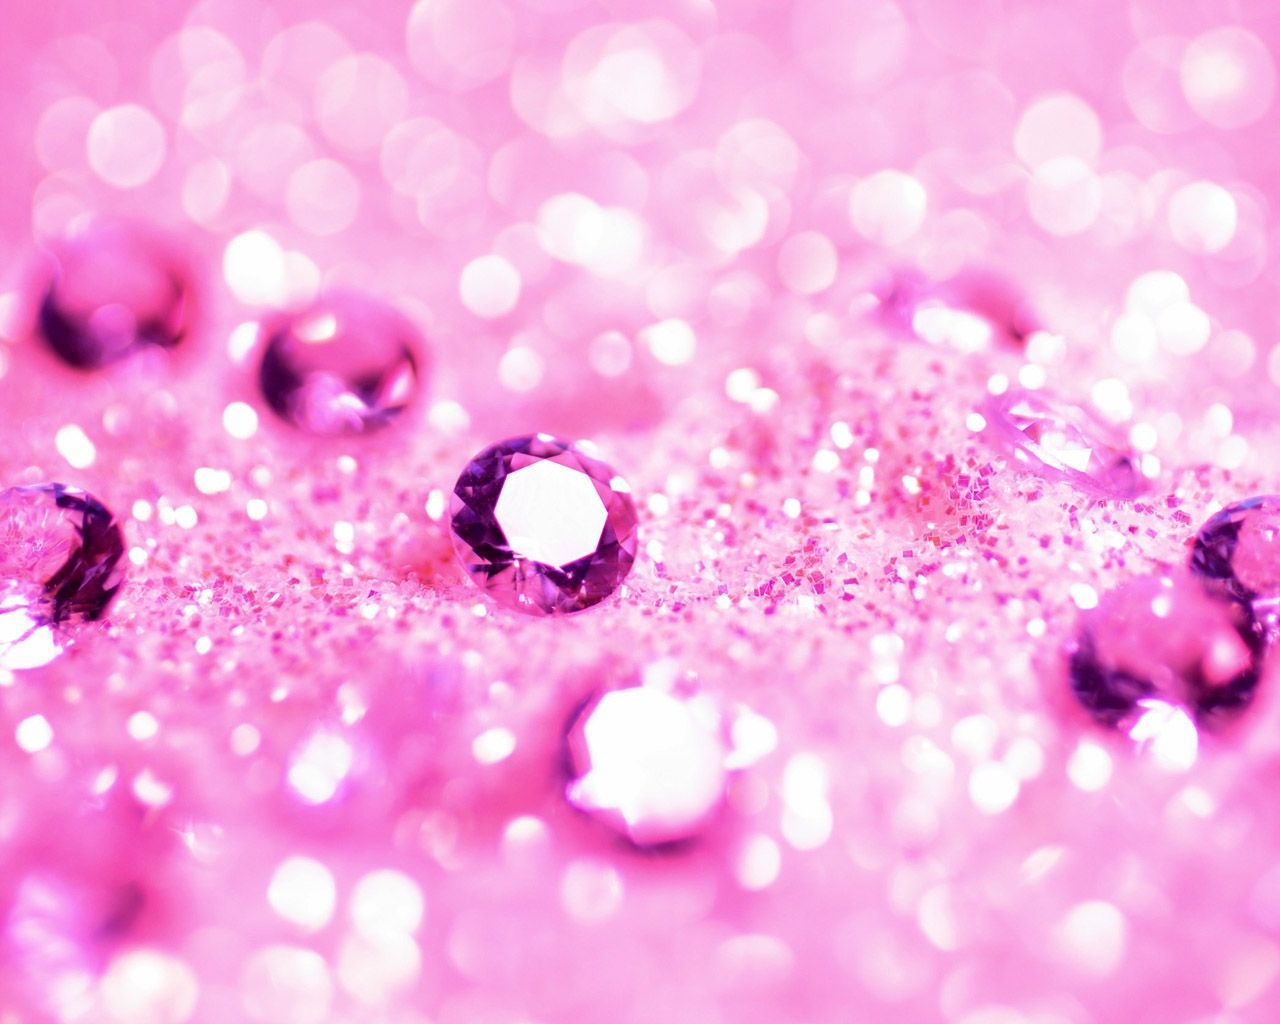 Pink Wallpapers Cute Background Images - Desktop Images